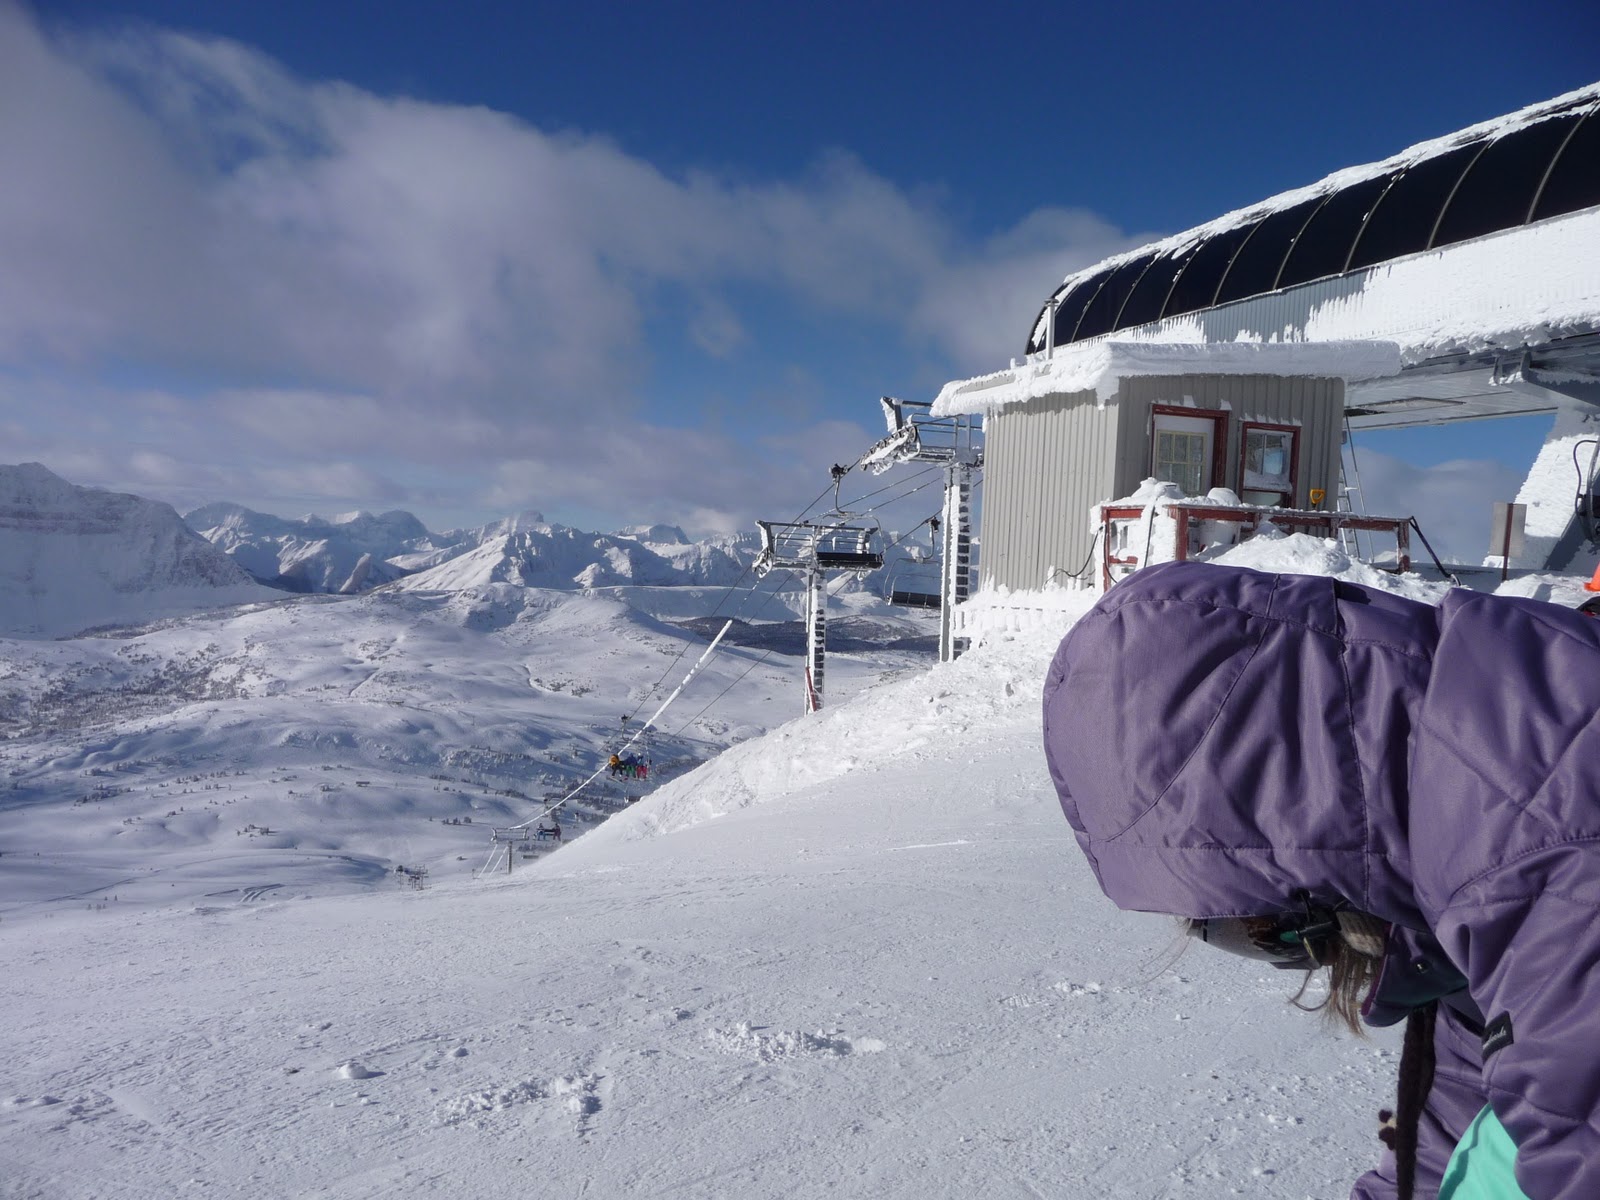 Tom and Kate's Travel Blog: Sunshine Village Ski Resort